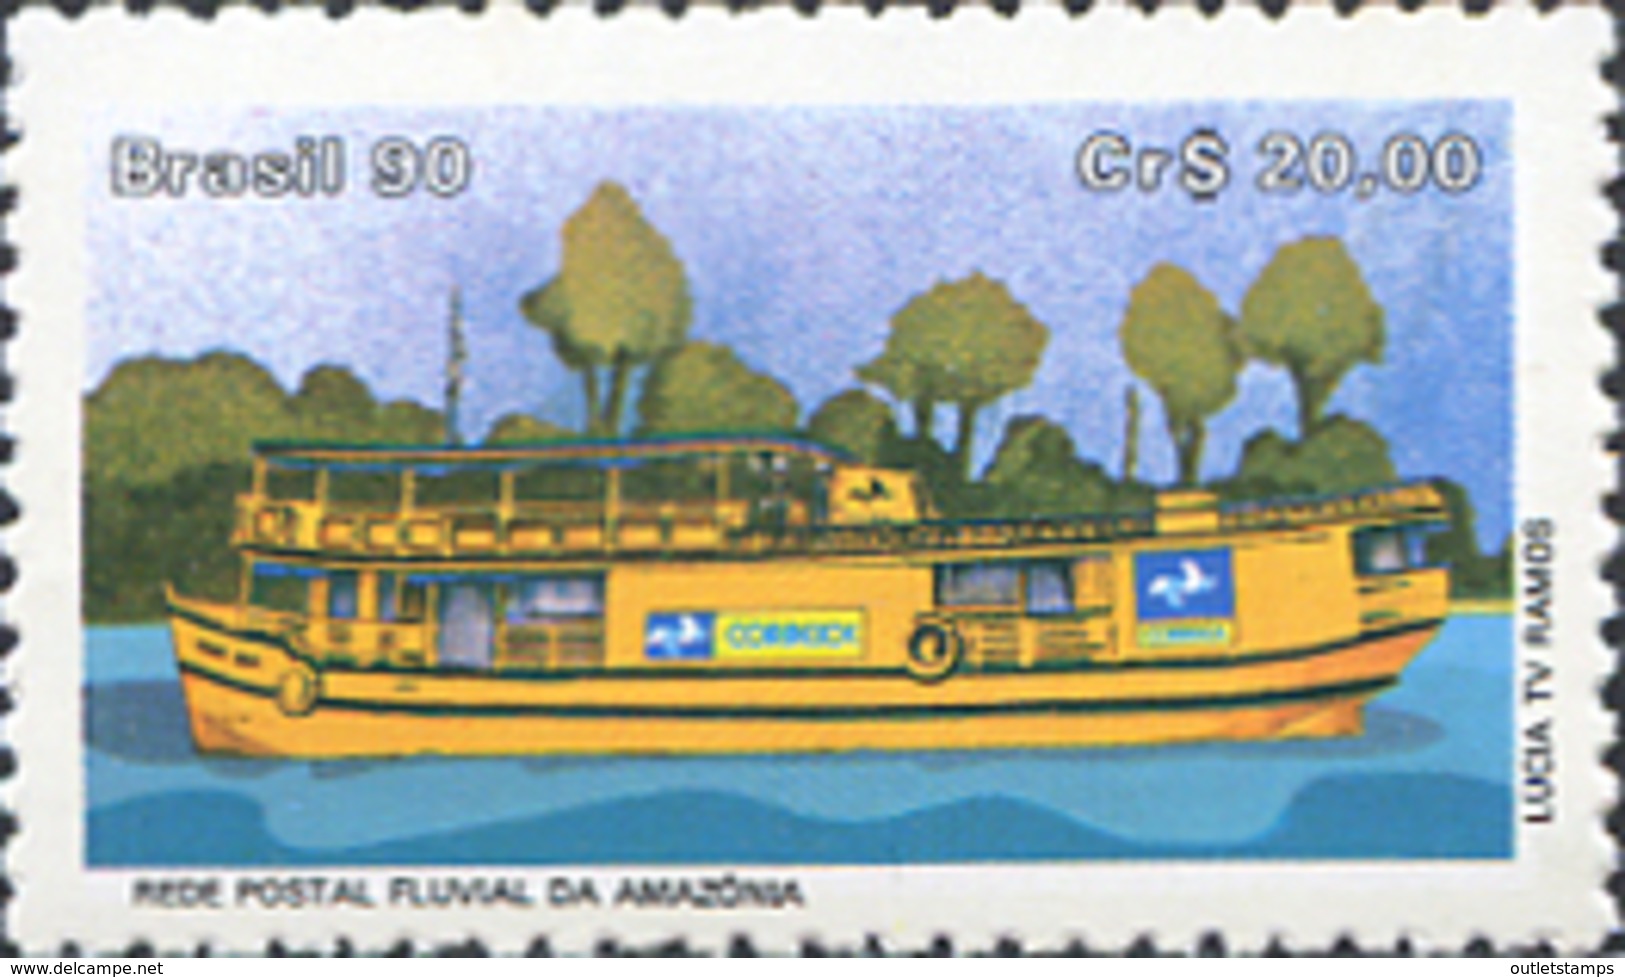 Ref. 239550 * NEW *  - BRAZIL . 1990. AMAZONES RIVER POSTAL SERVICE. RED POSTAL FLUVIAL DEL AMAZONAS - Nuevos